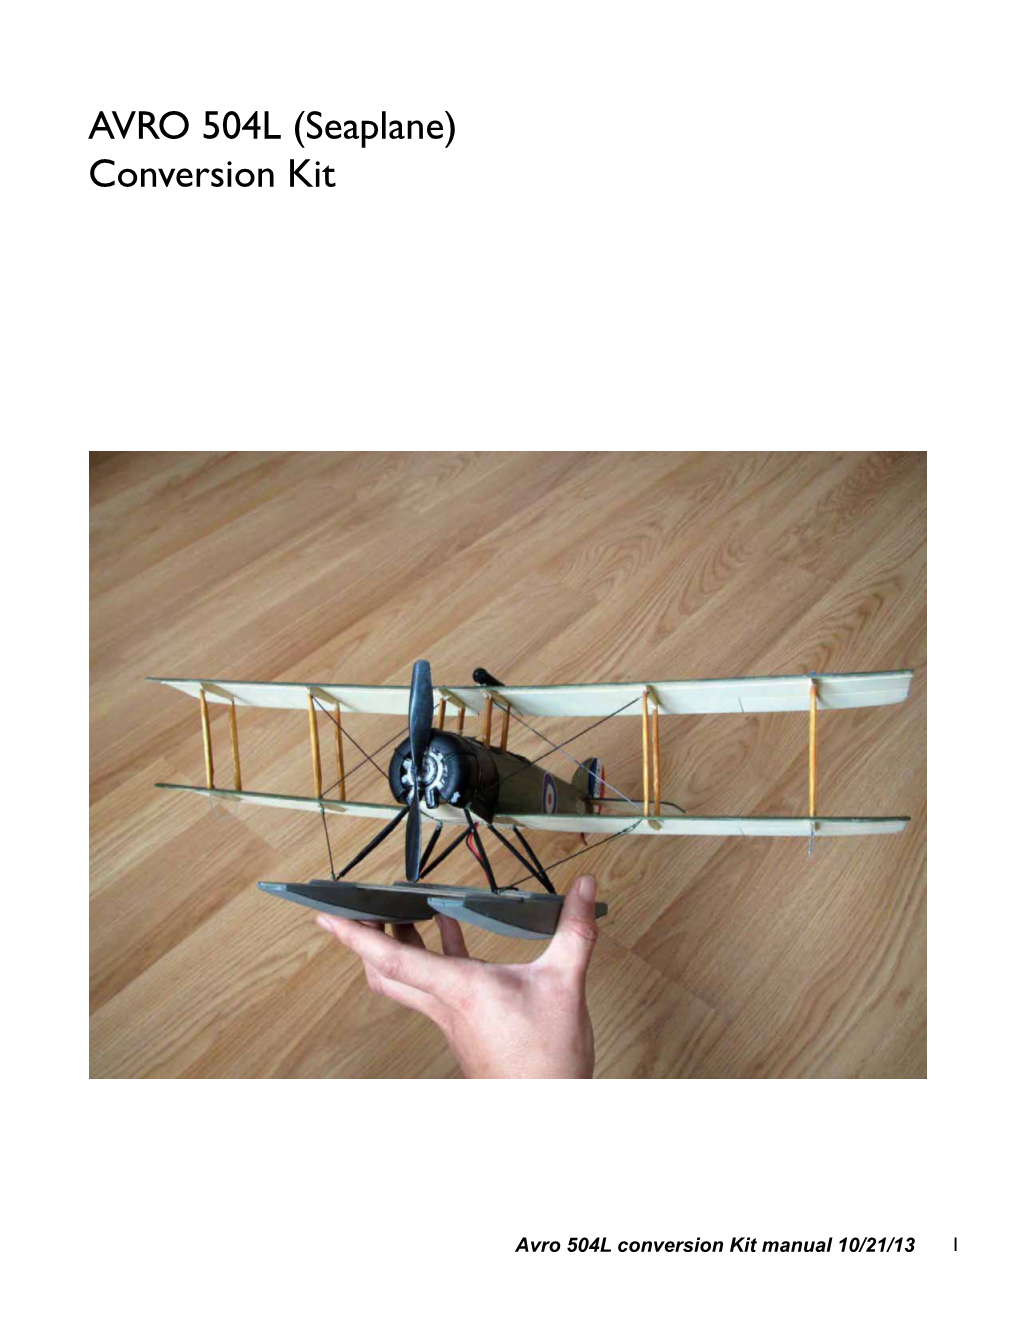 AVRO 504L (Seaplane) Conversion Kit